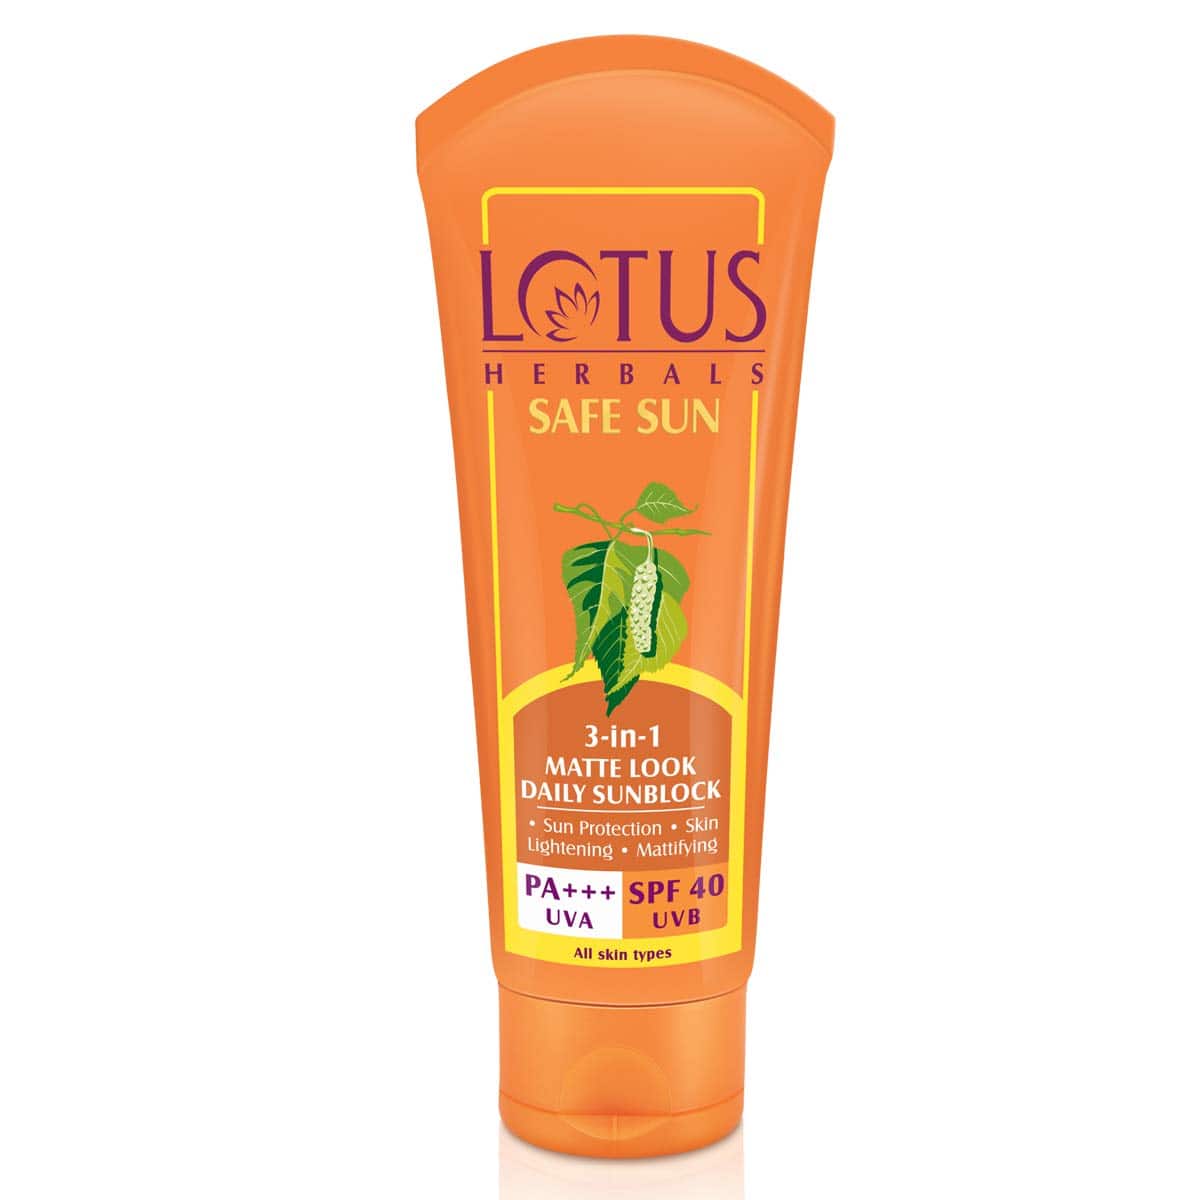 Lotus Herbals Safe Sun 3-In-1 Matte Look Daily Sunblock Lotion  